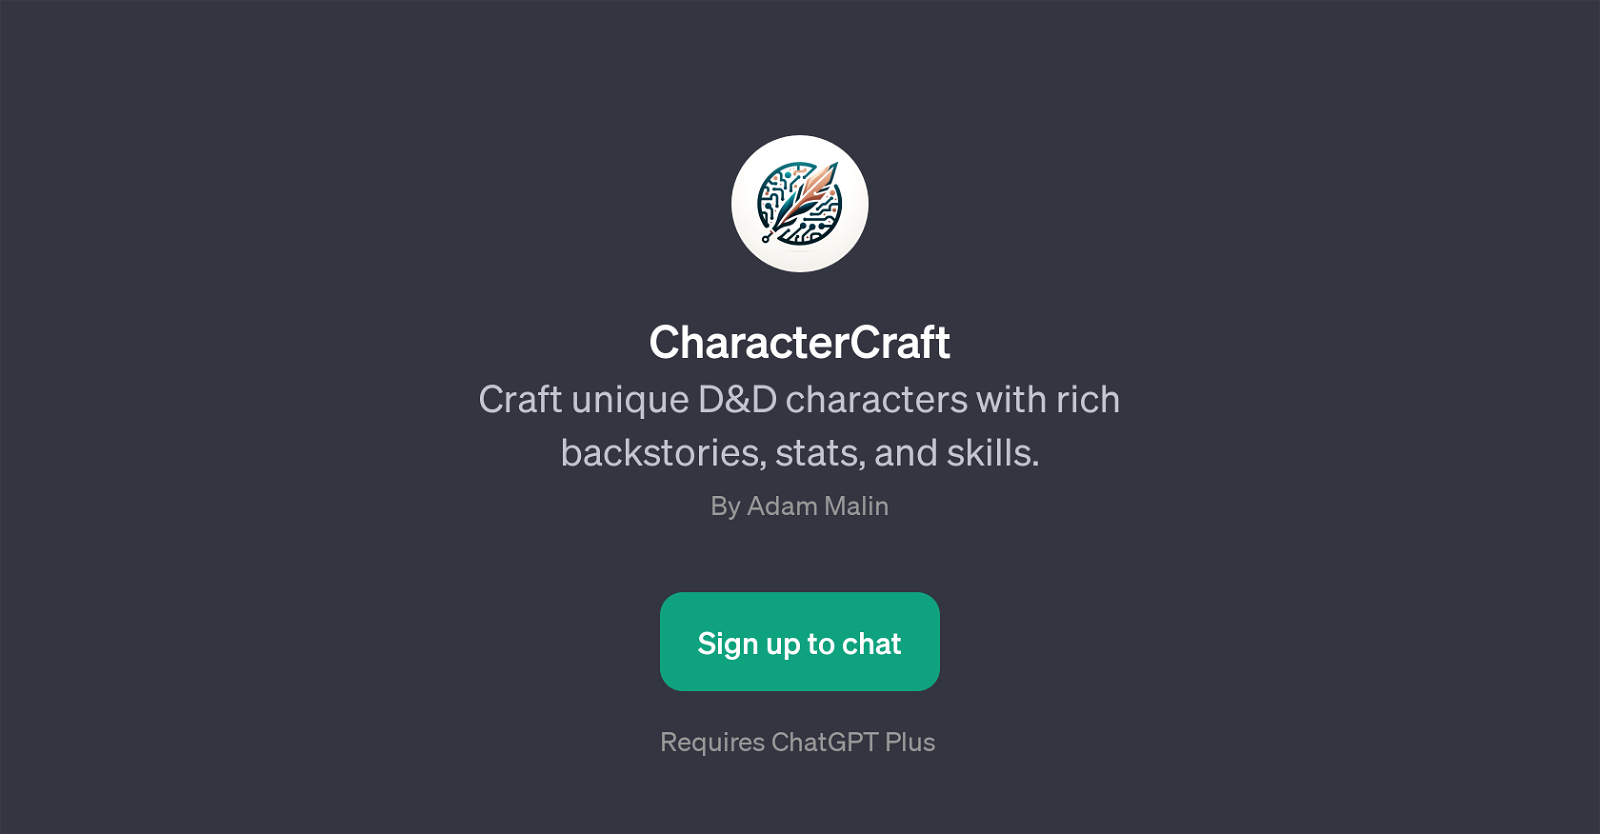 CharacterCraft website